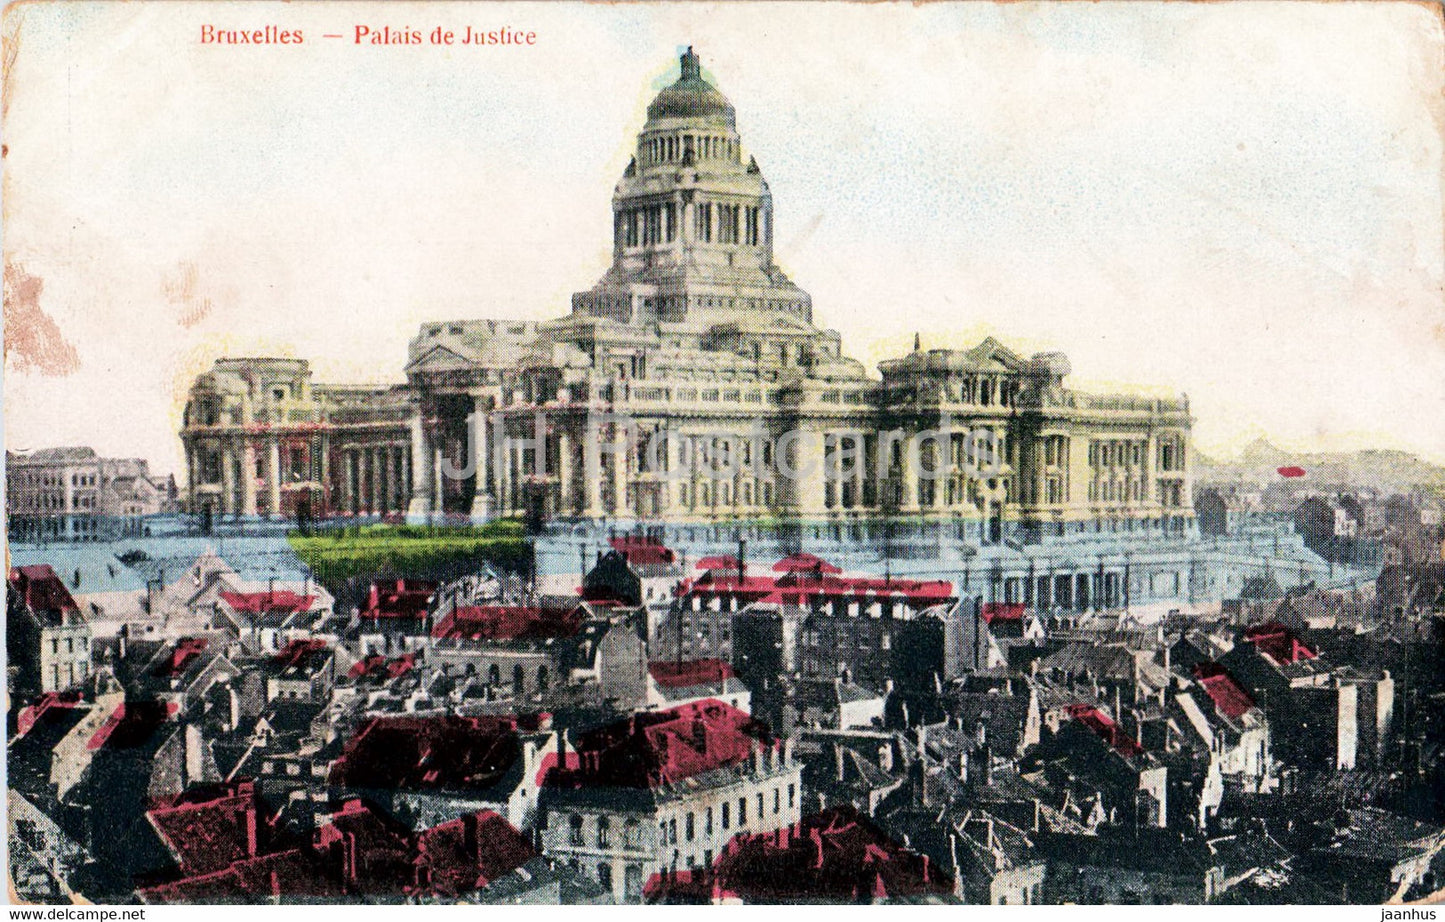 Bruxelles - Brussels - Palais de Justice - old postcard - 1917 - Belgium - used - JH Postcards